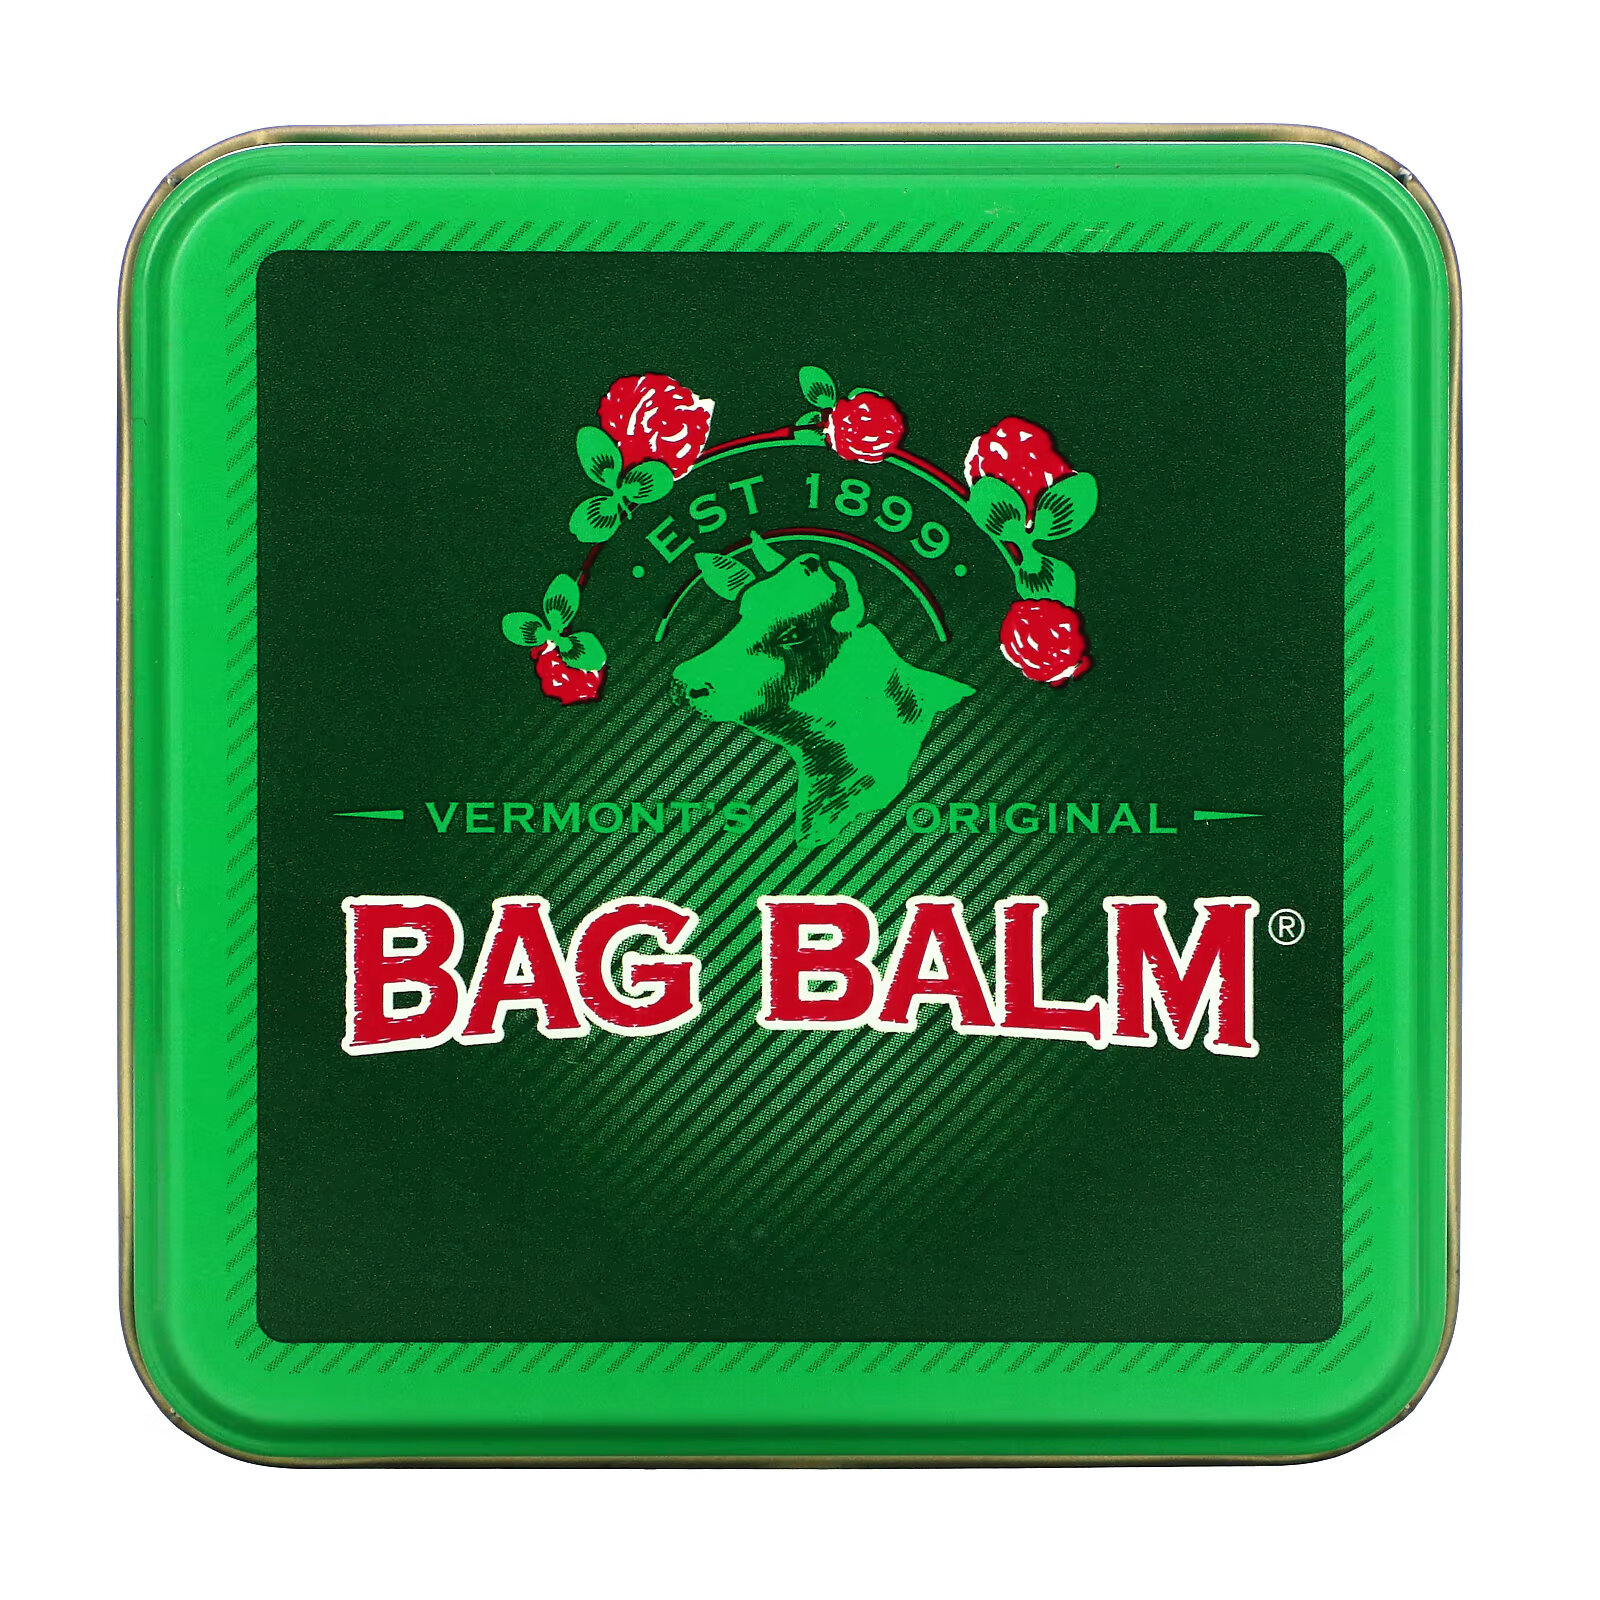 Bag Balm, Увлажняющее средство для кожи рук и тела, для сухой кожи, 8 унций цена и фото